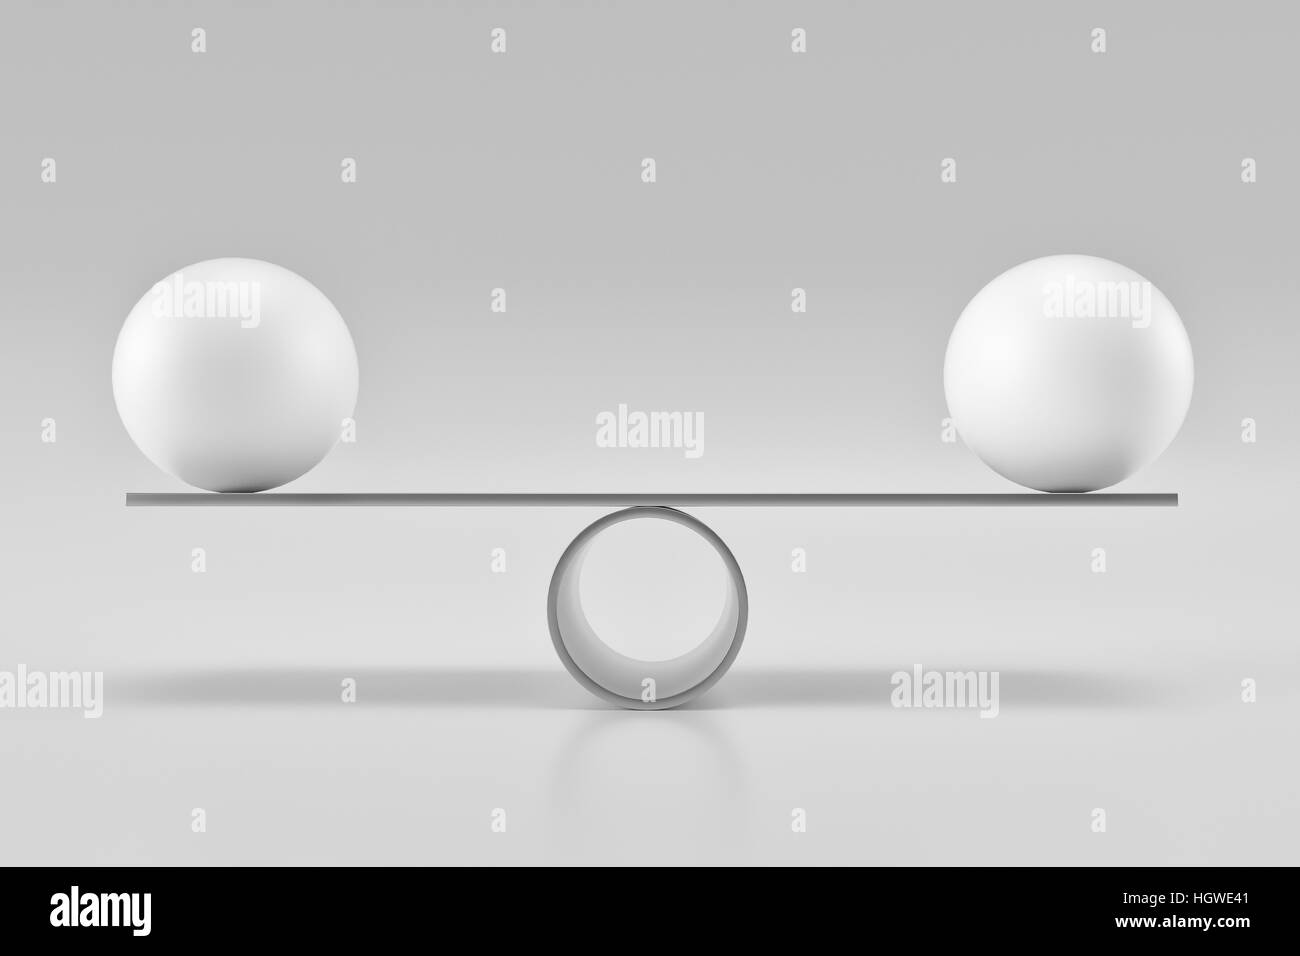 Balancing balls - 3D rendering Stock Photo